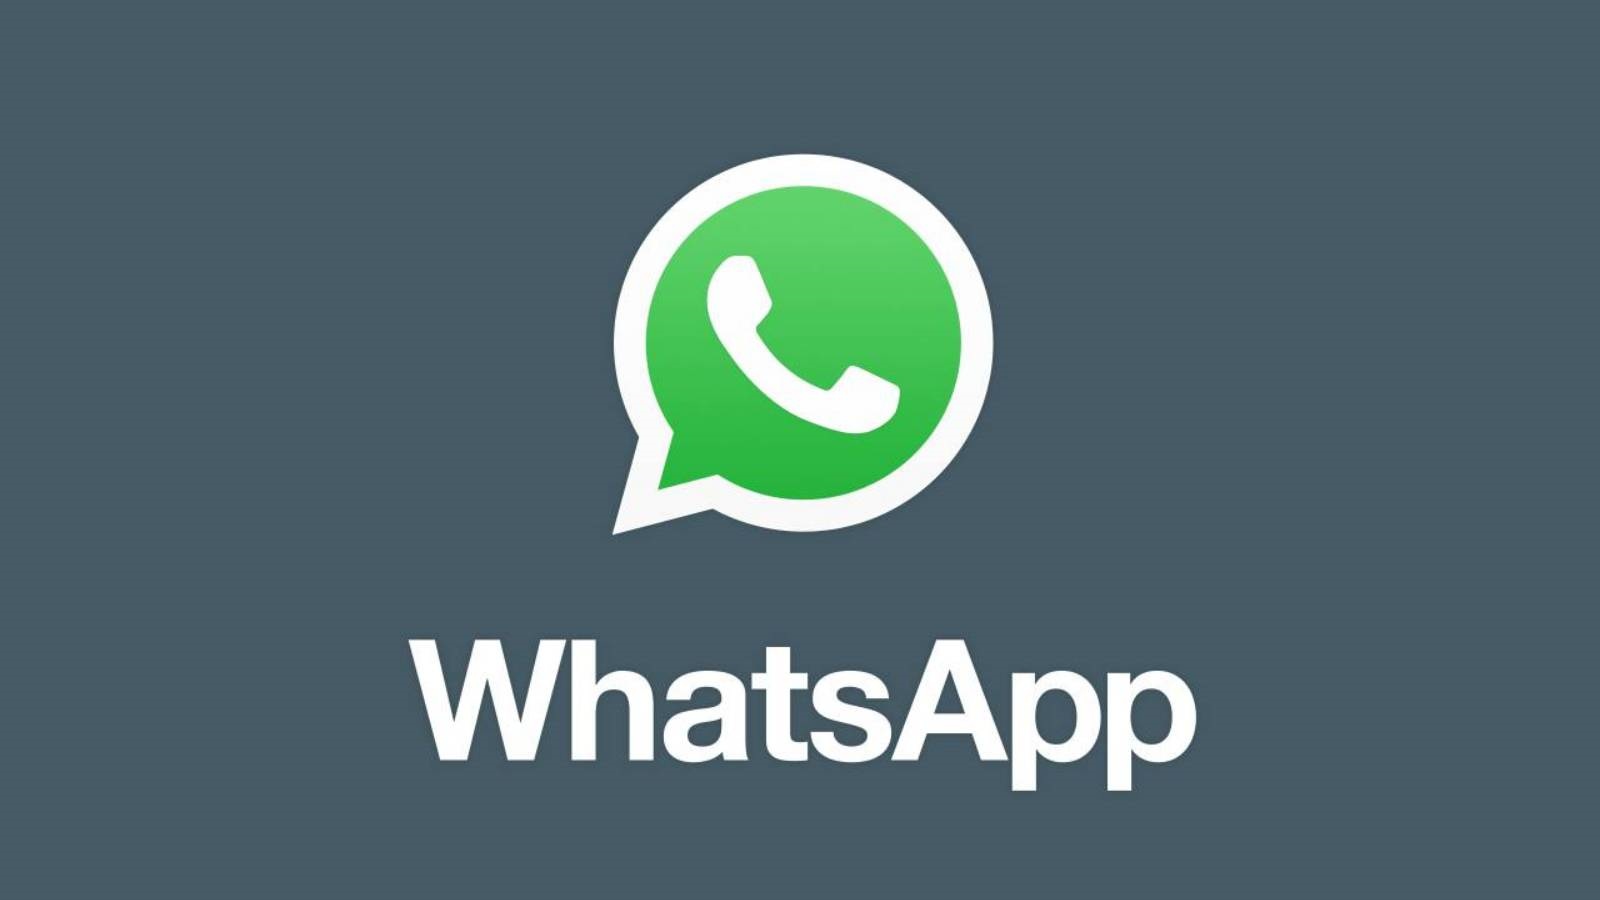 WhatsApp shops